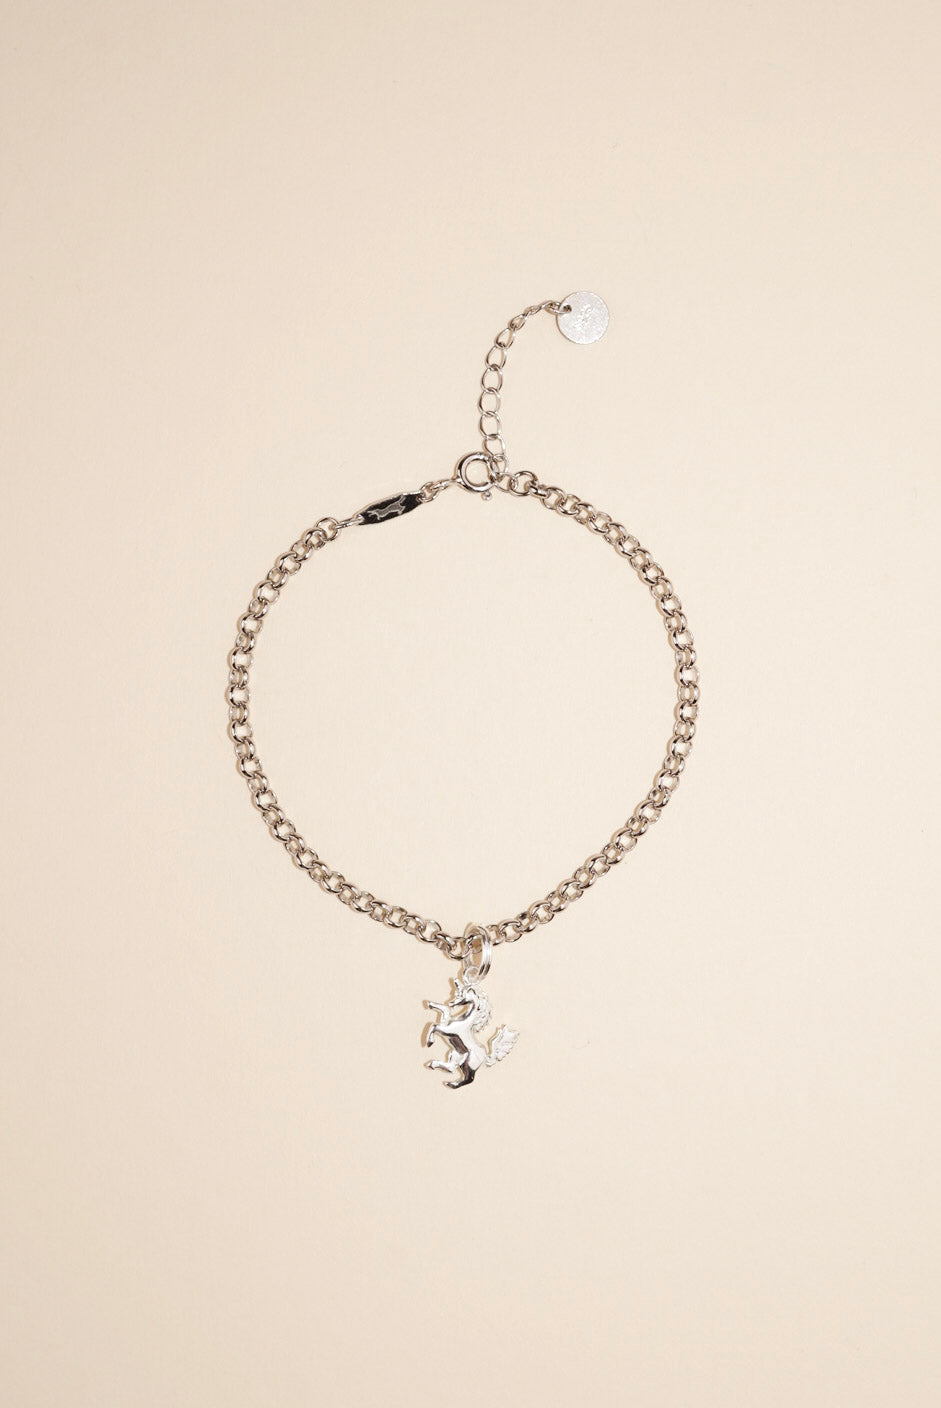 Silver Unicorn Bracelet